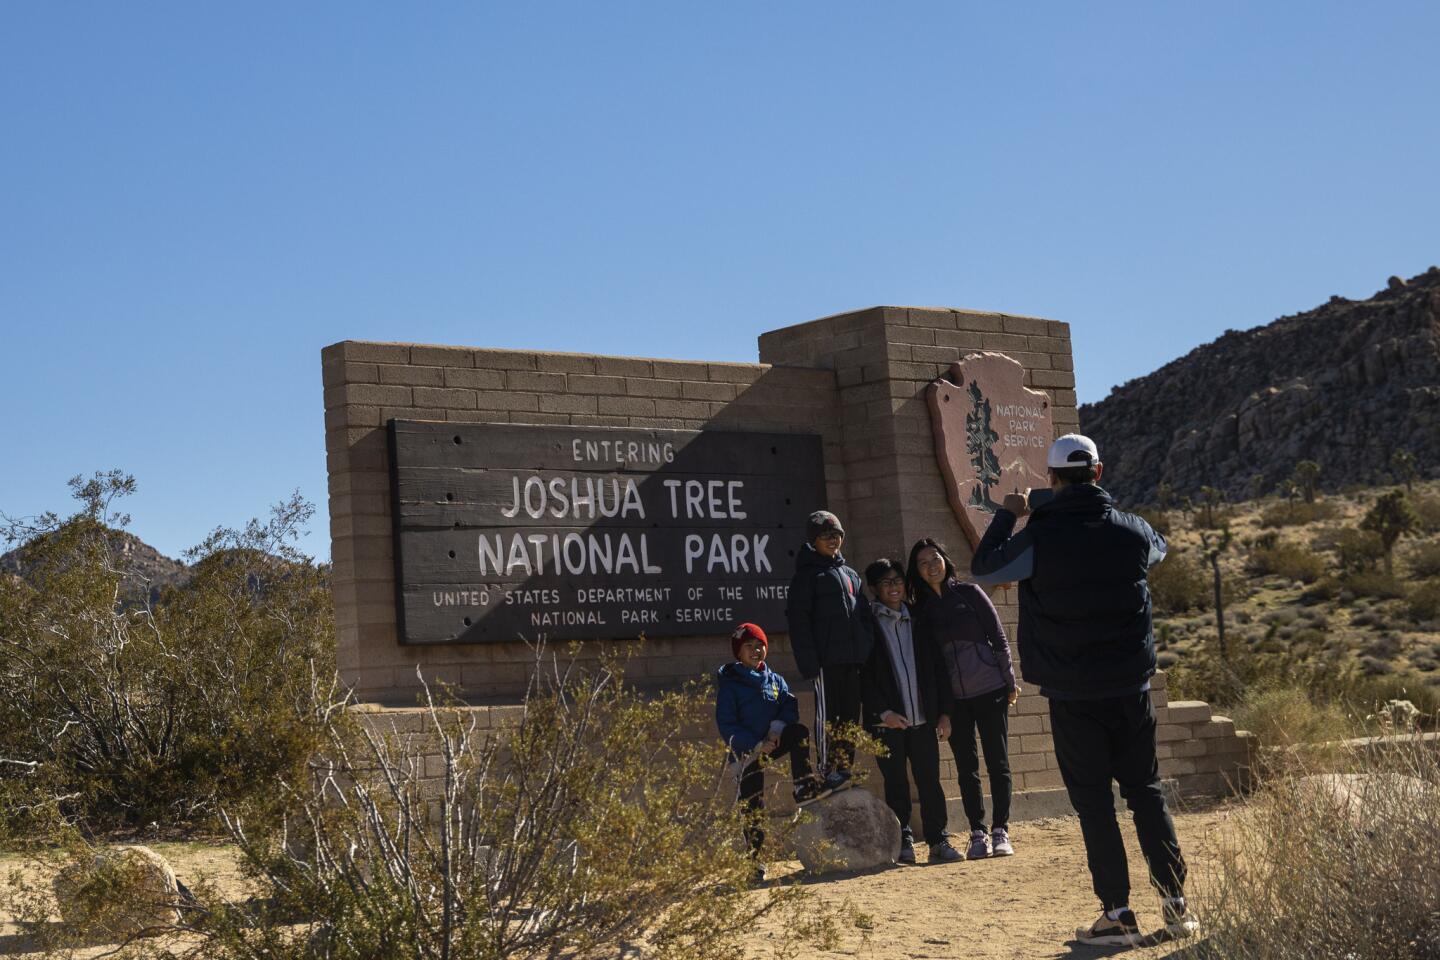 Joshua Tree National Park closure